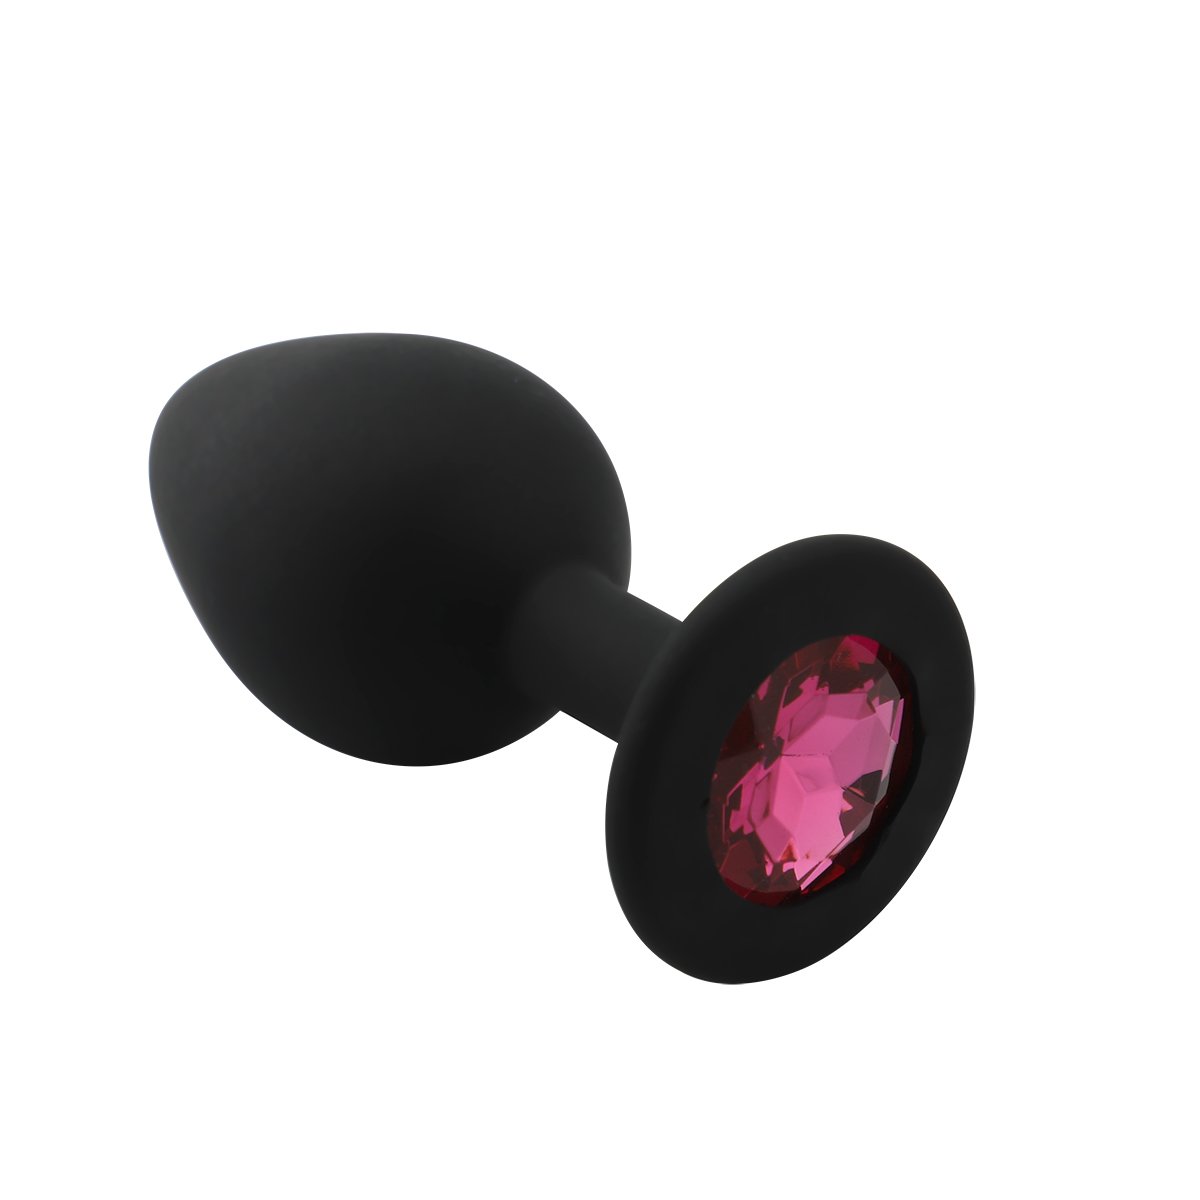 Foto van Banoch - Buttplug Penumbra Hot Pink Medium - Siliconen buttplug Zwart - kristal - Roze